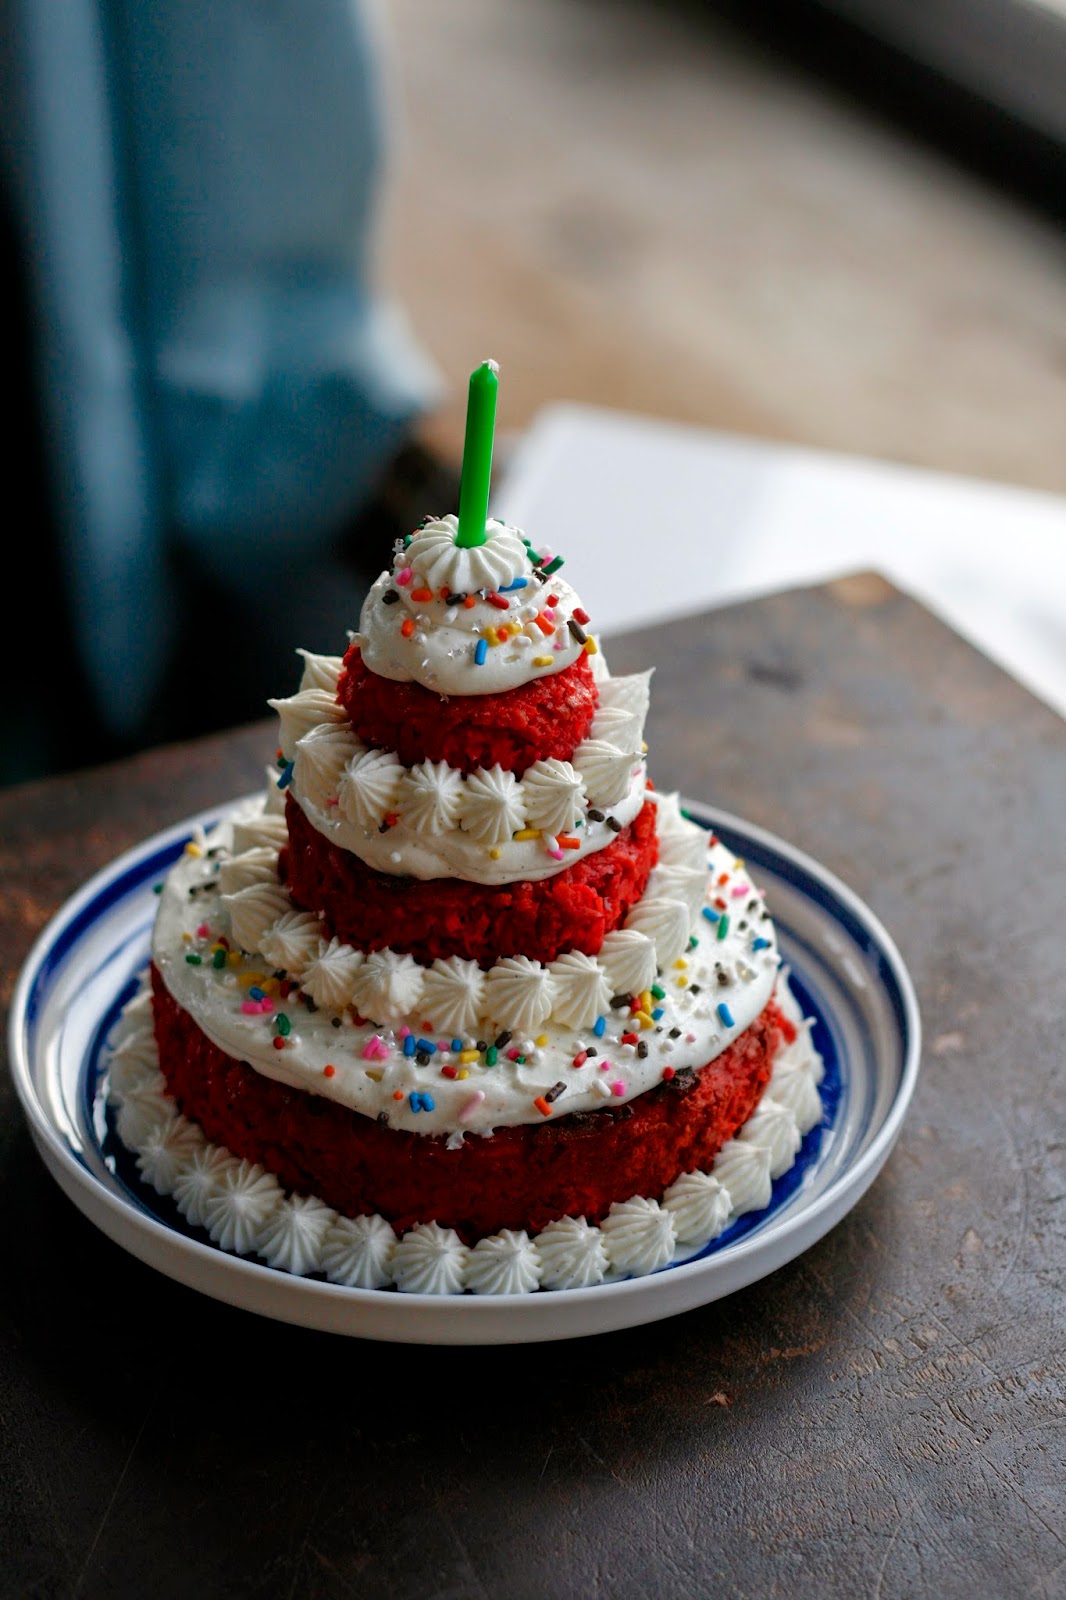 Indigo Scones: Mini Tiered Red Velvet Macaroon Cake